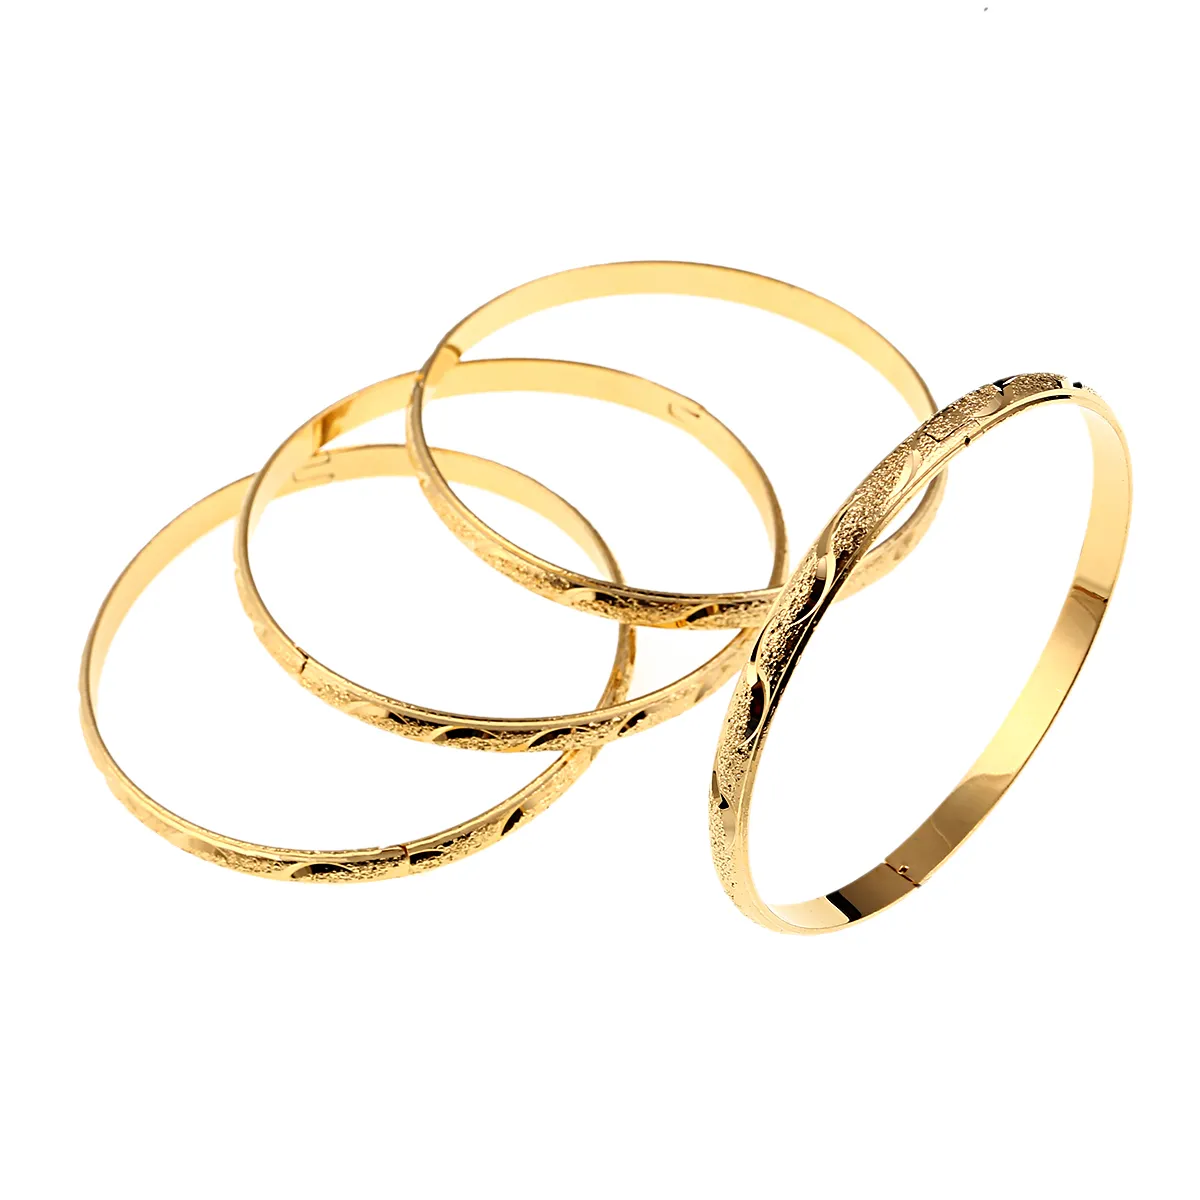 4pcs Wholesale Fashion Dubai Bangle Jewelry Gold Ethiopian Bracelet for Women Africa Items